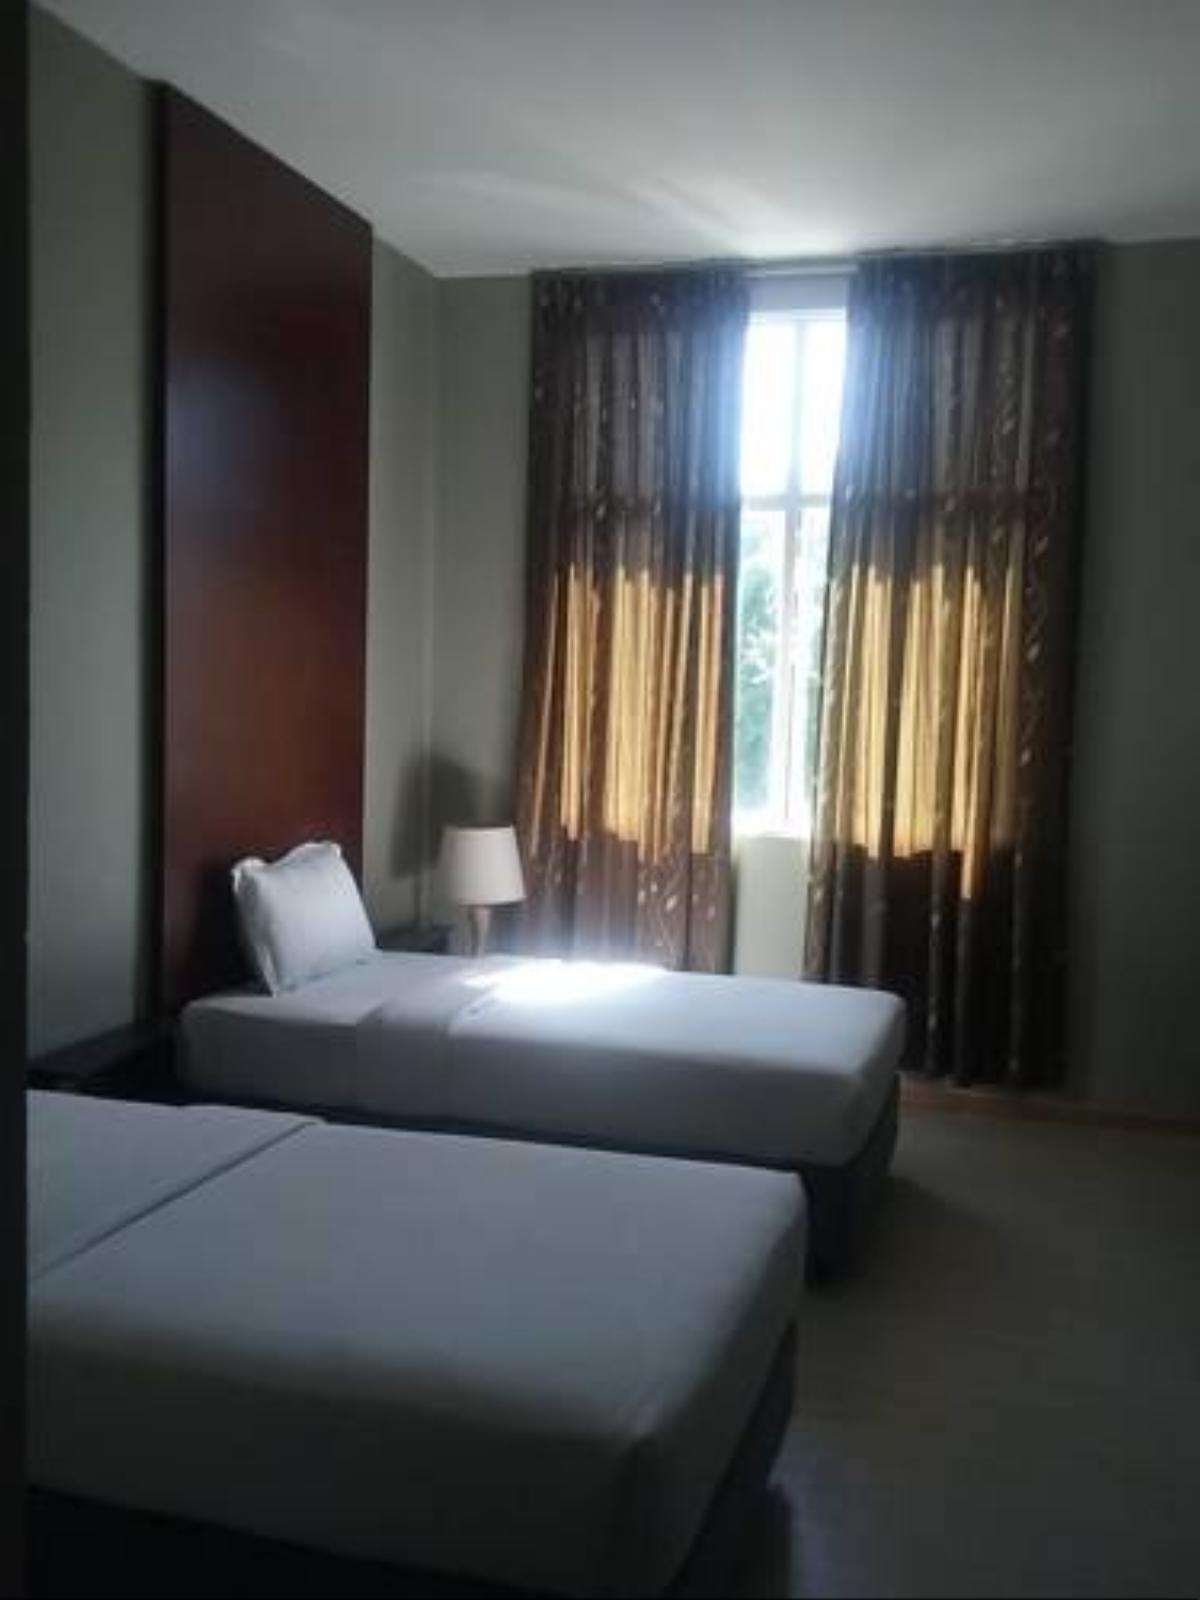 Ginasuite Kompleks27 Hotel Hotel Bandar Seri Begawan Brunei Darussalam